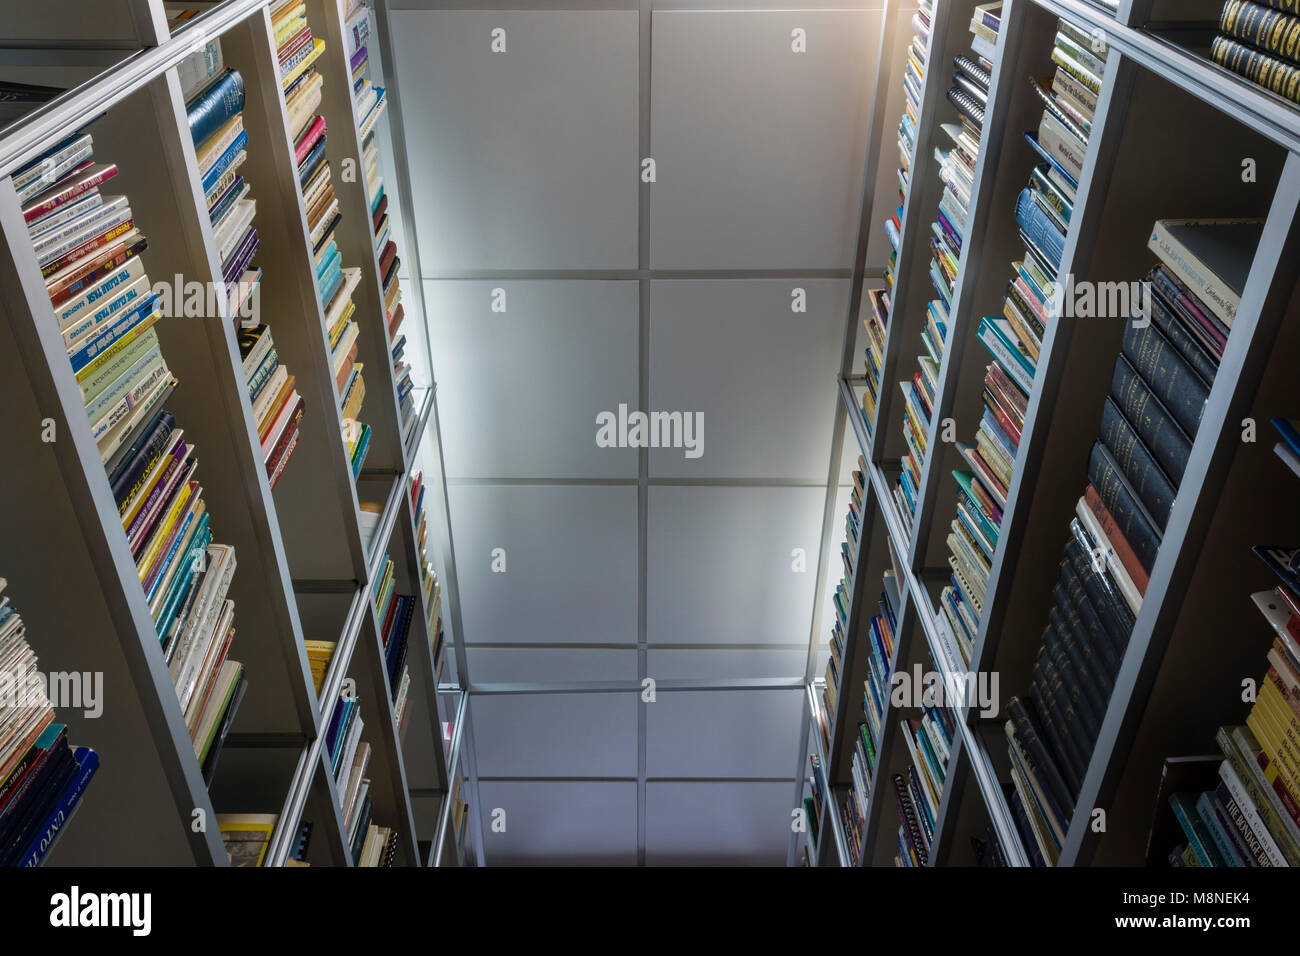 La biblioteca di libri Foto Stock